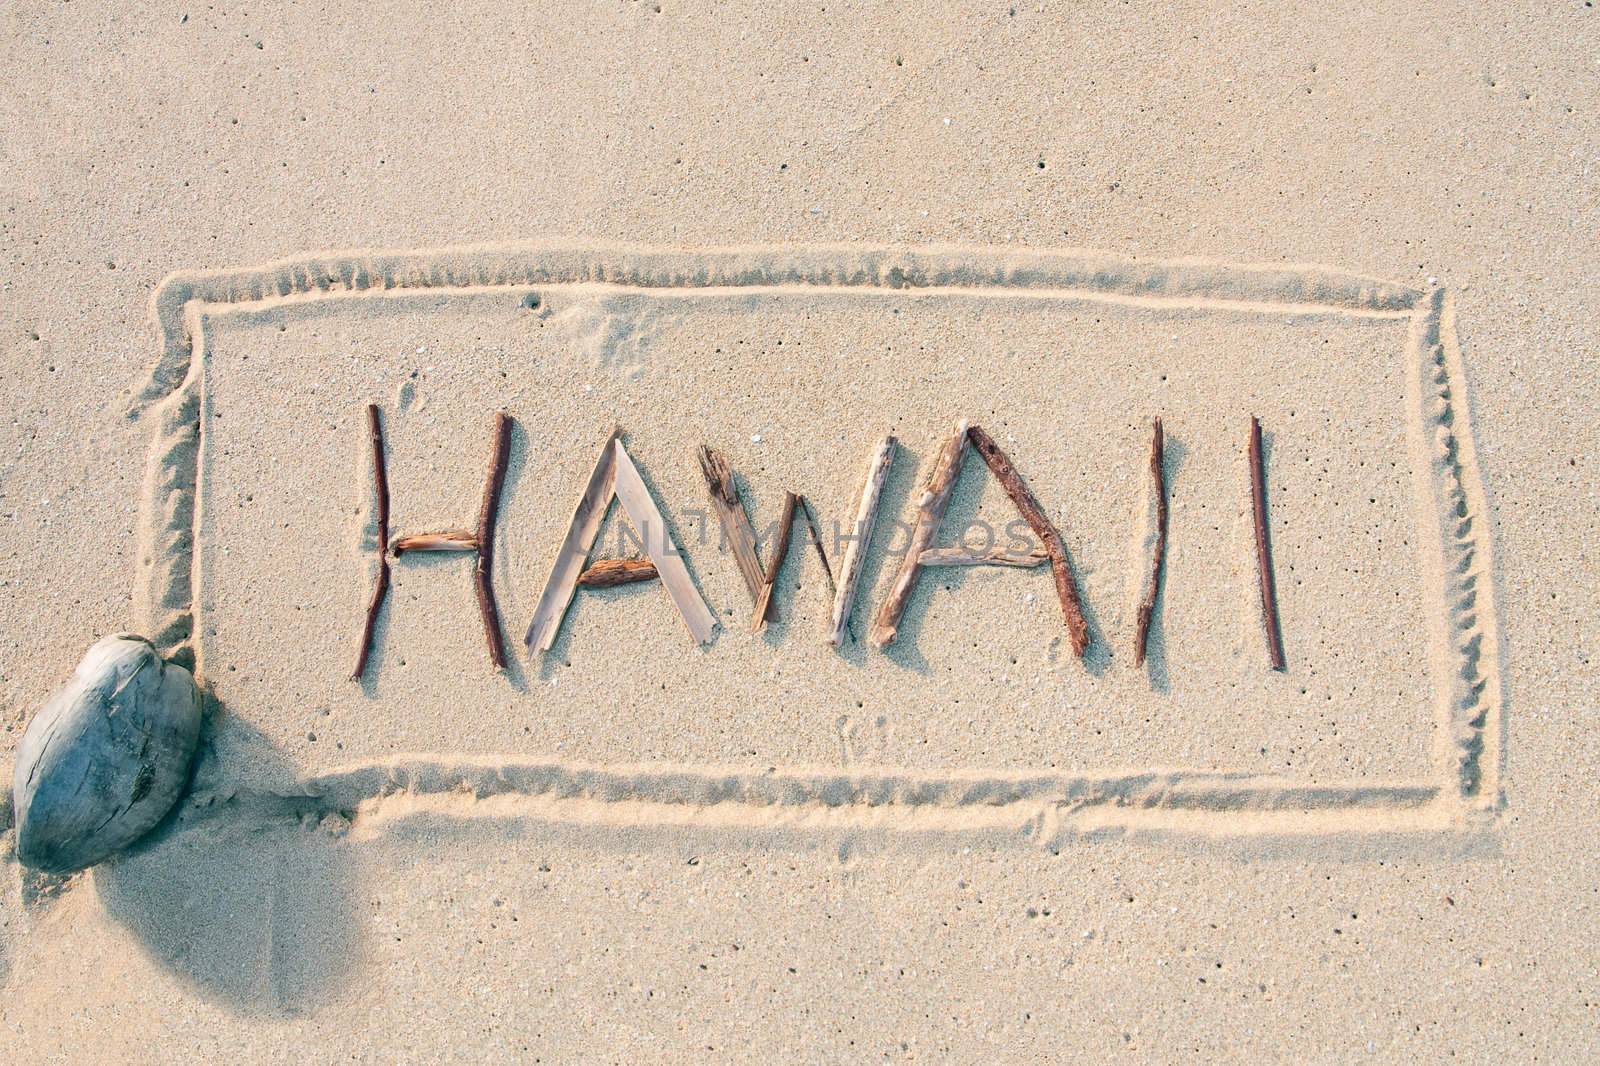 Hawaii written with sticks on the sand by svanblar